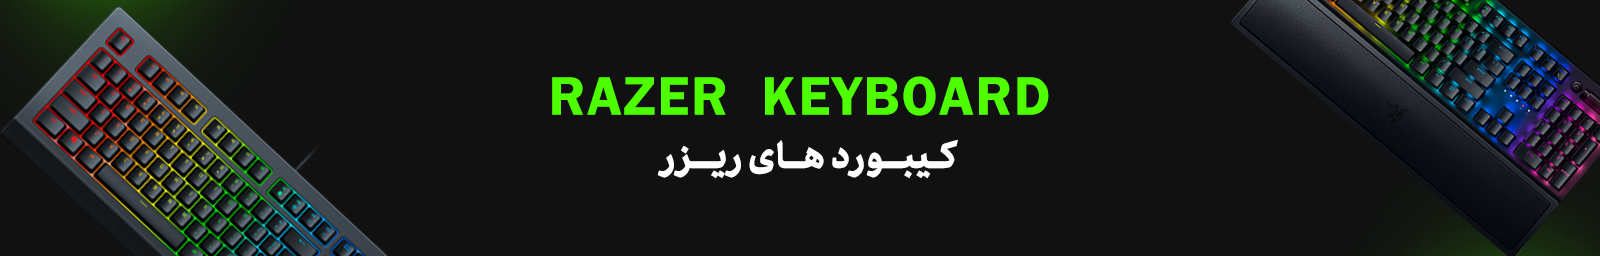 keyboard mobile razer